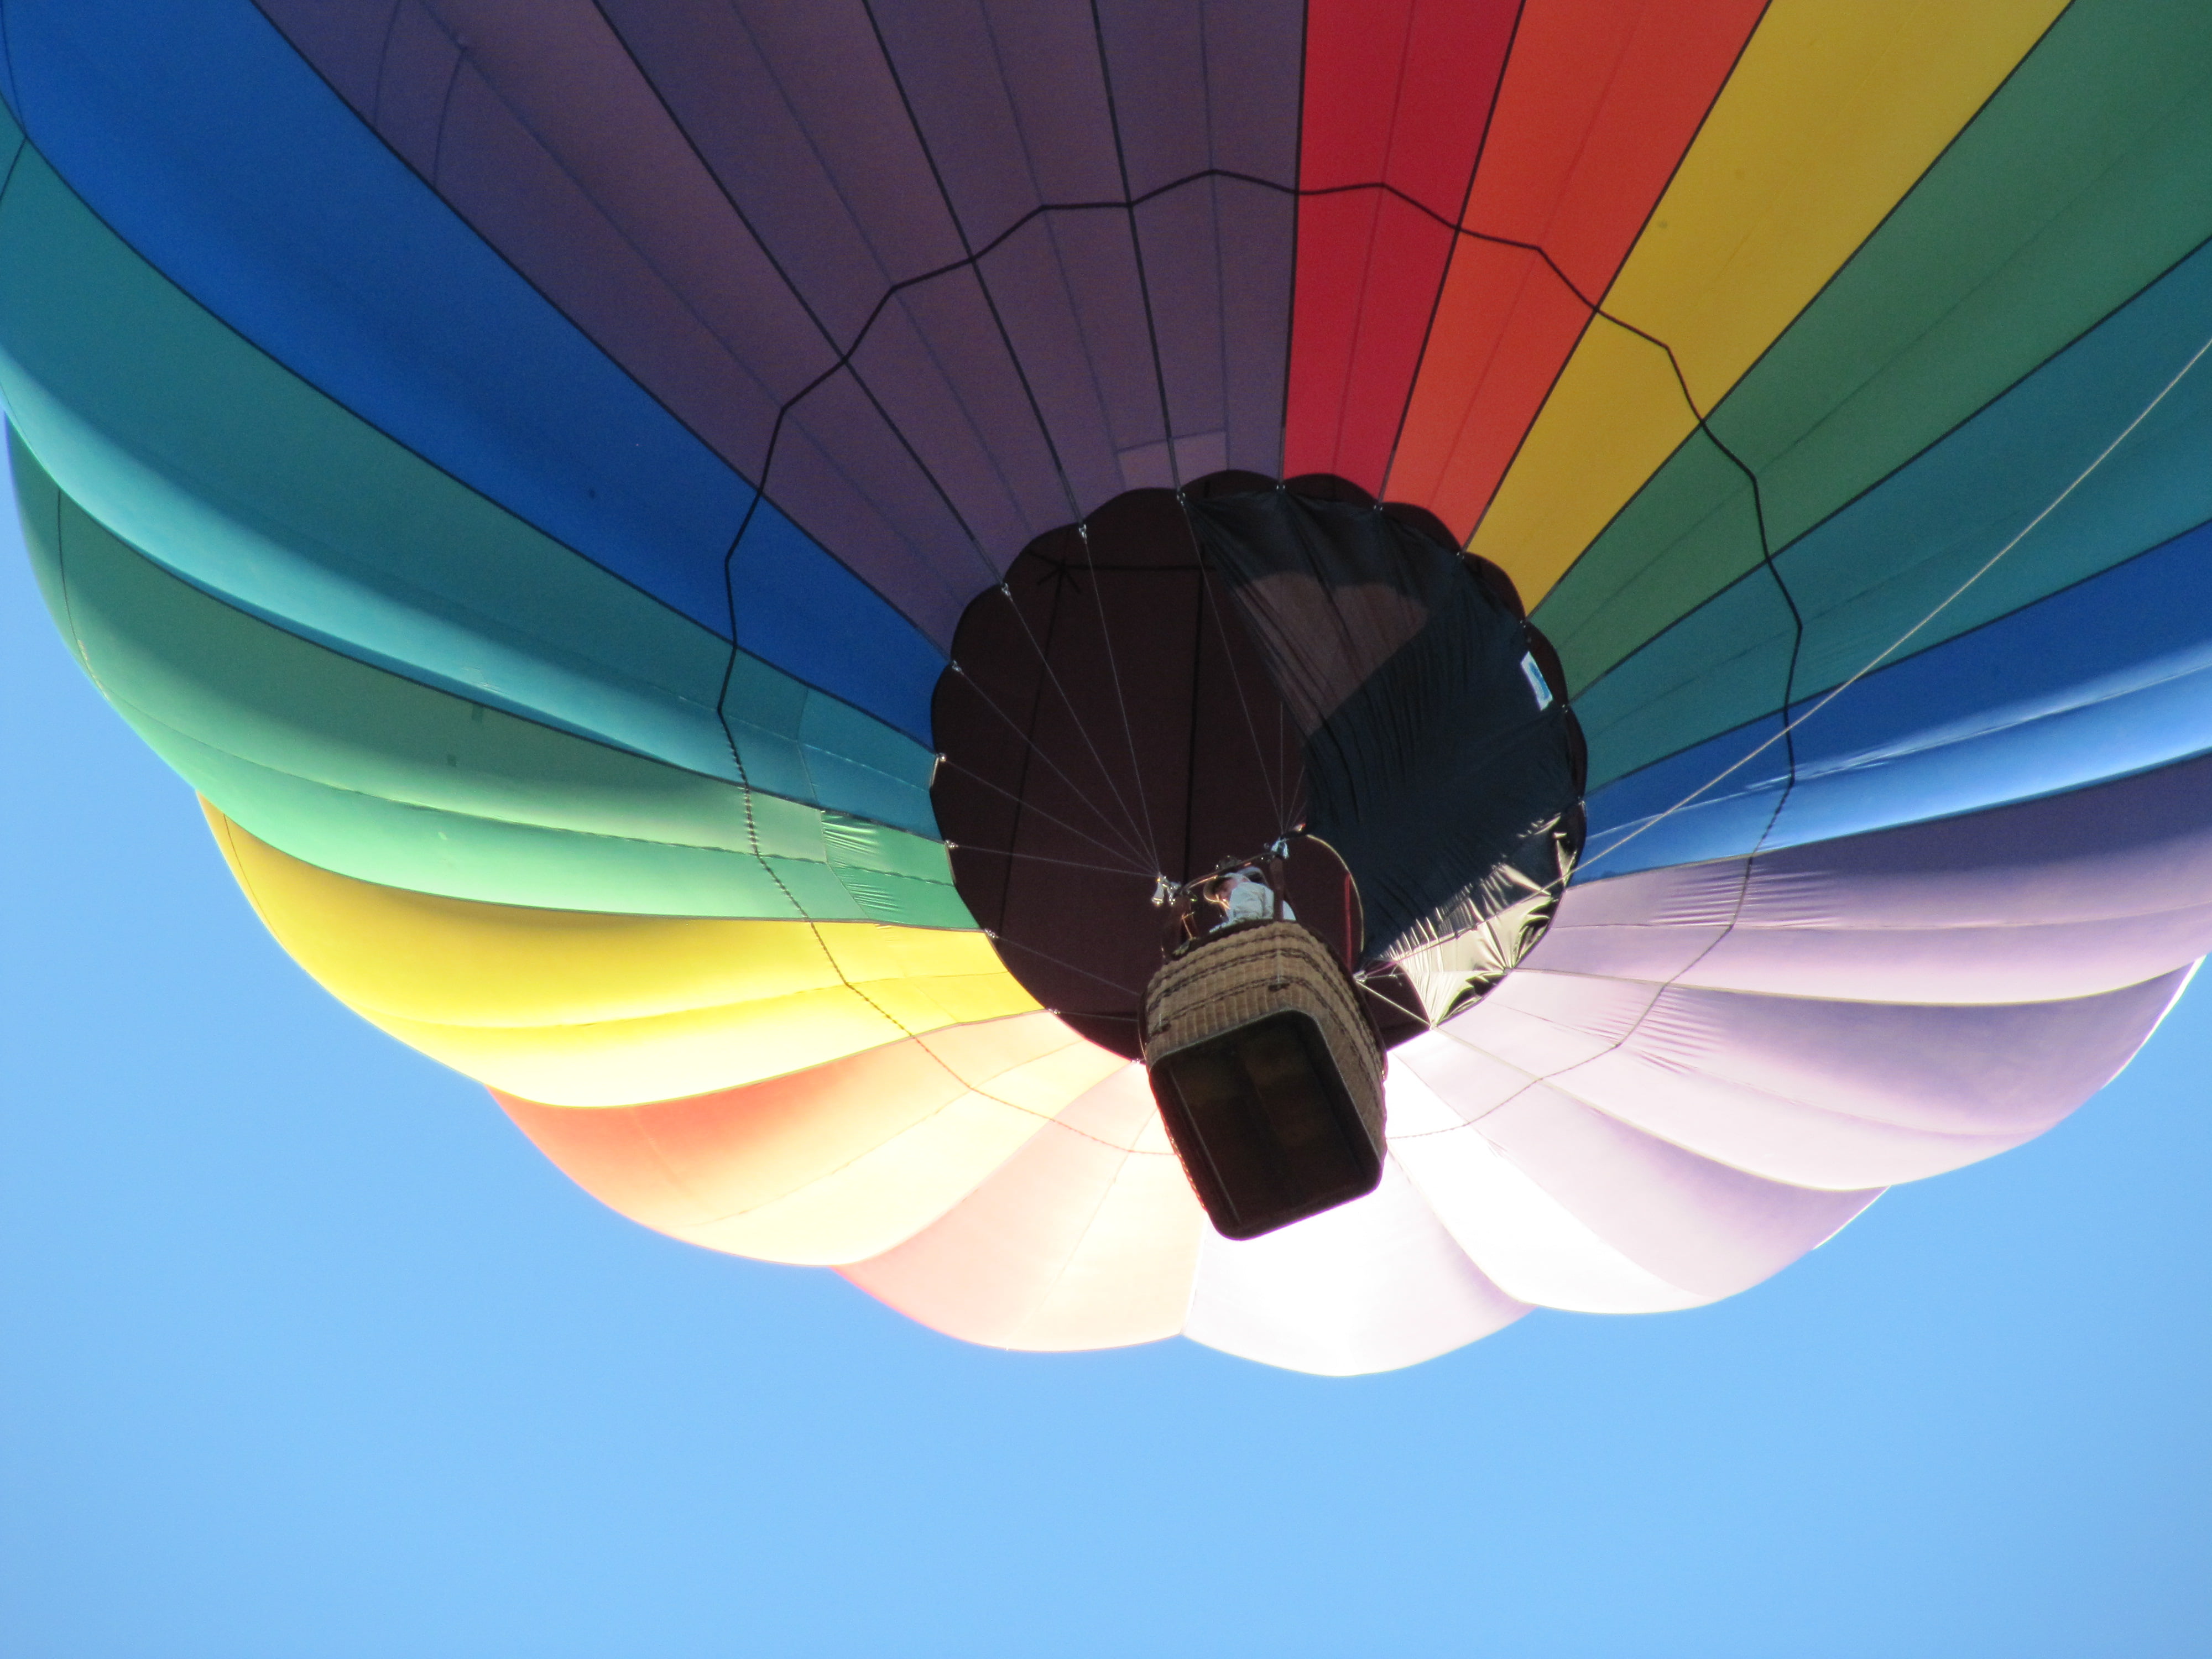 multicolored hot air balloon o